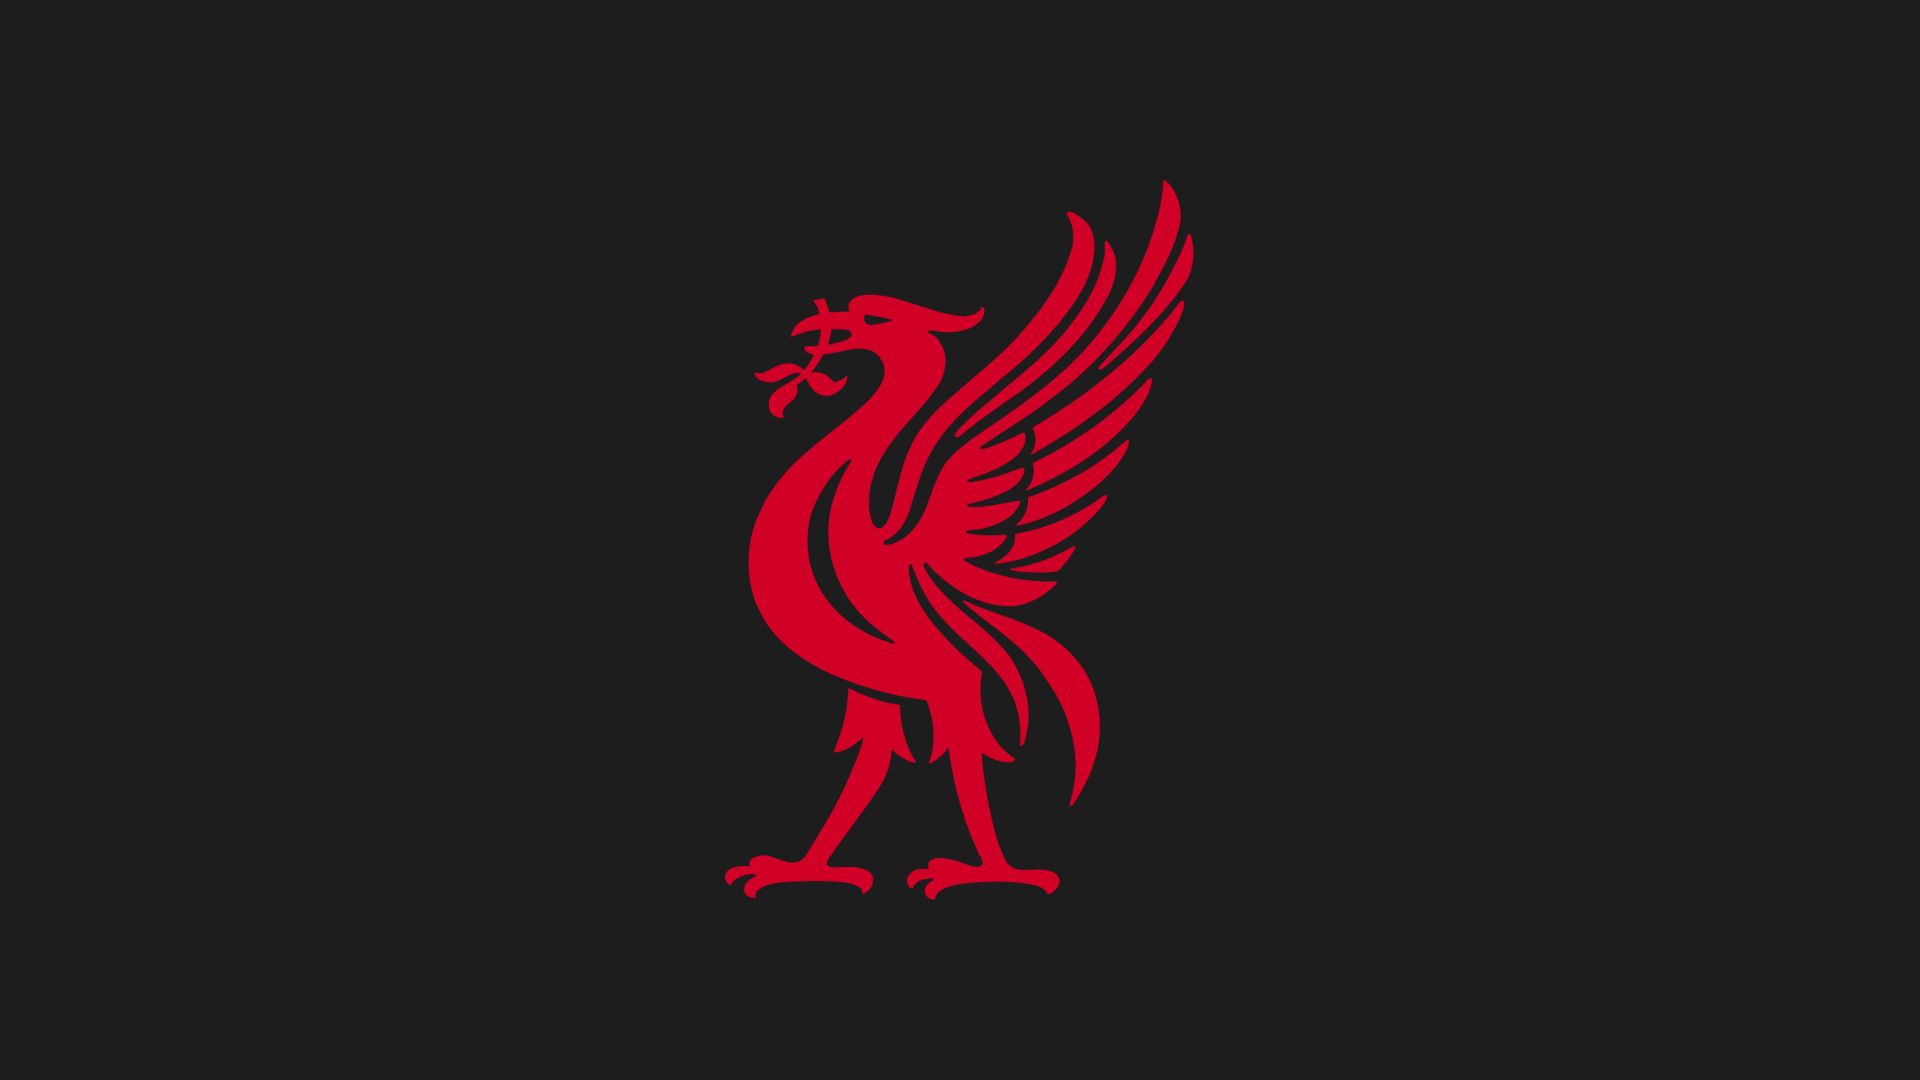 Liverpool FC YNWA